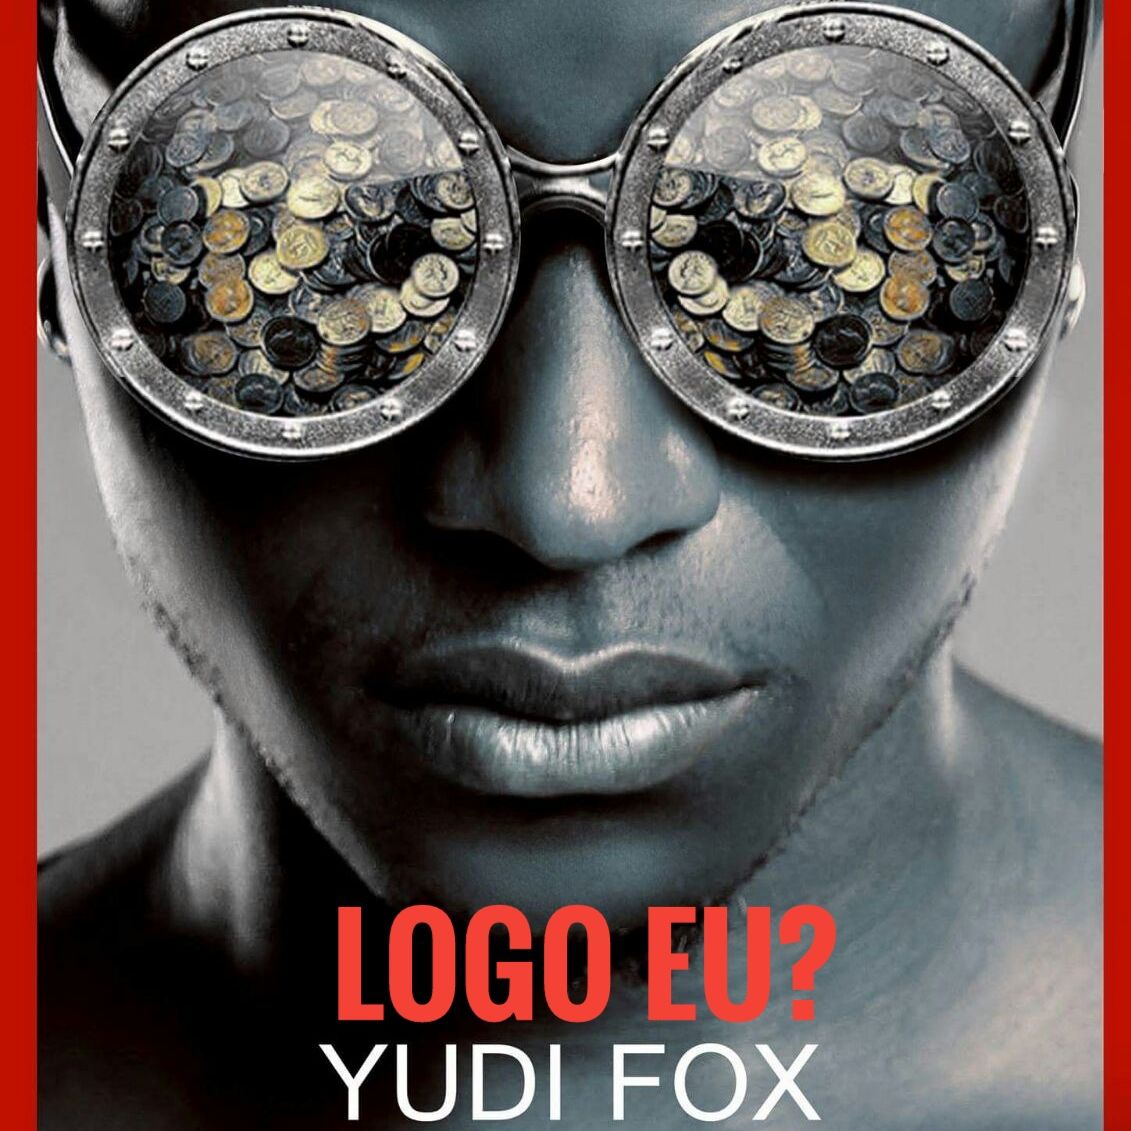 Lae alla Yudi Fox - Logo Eu?